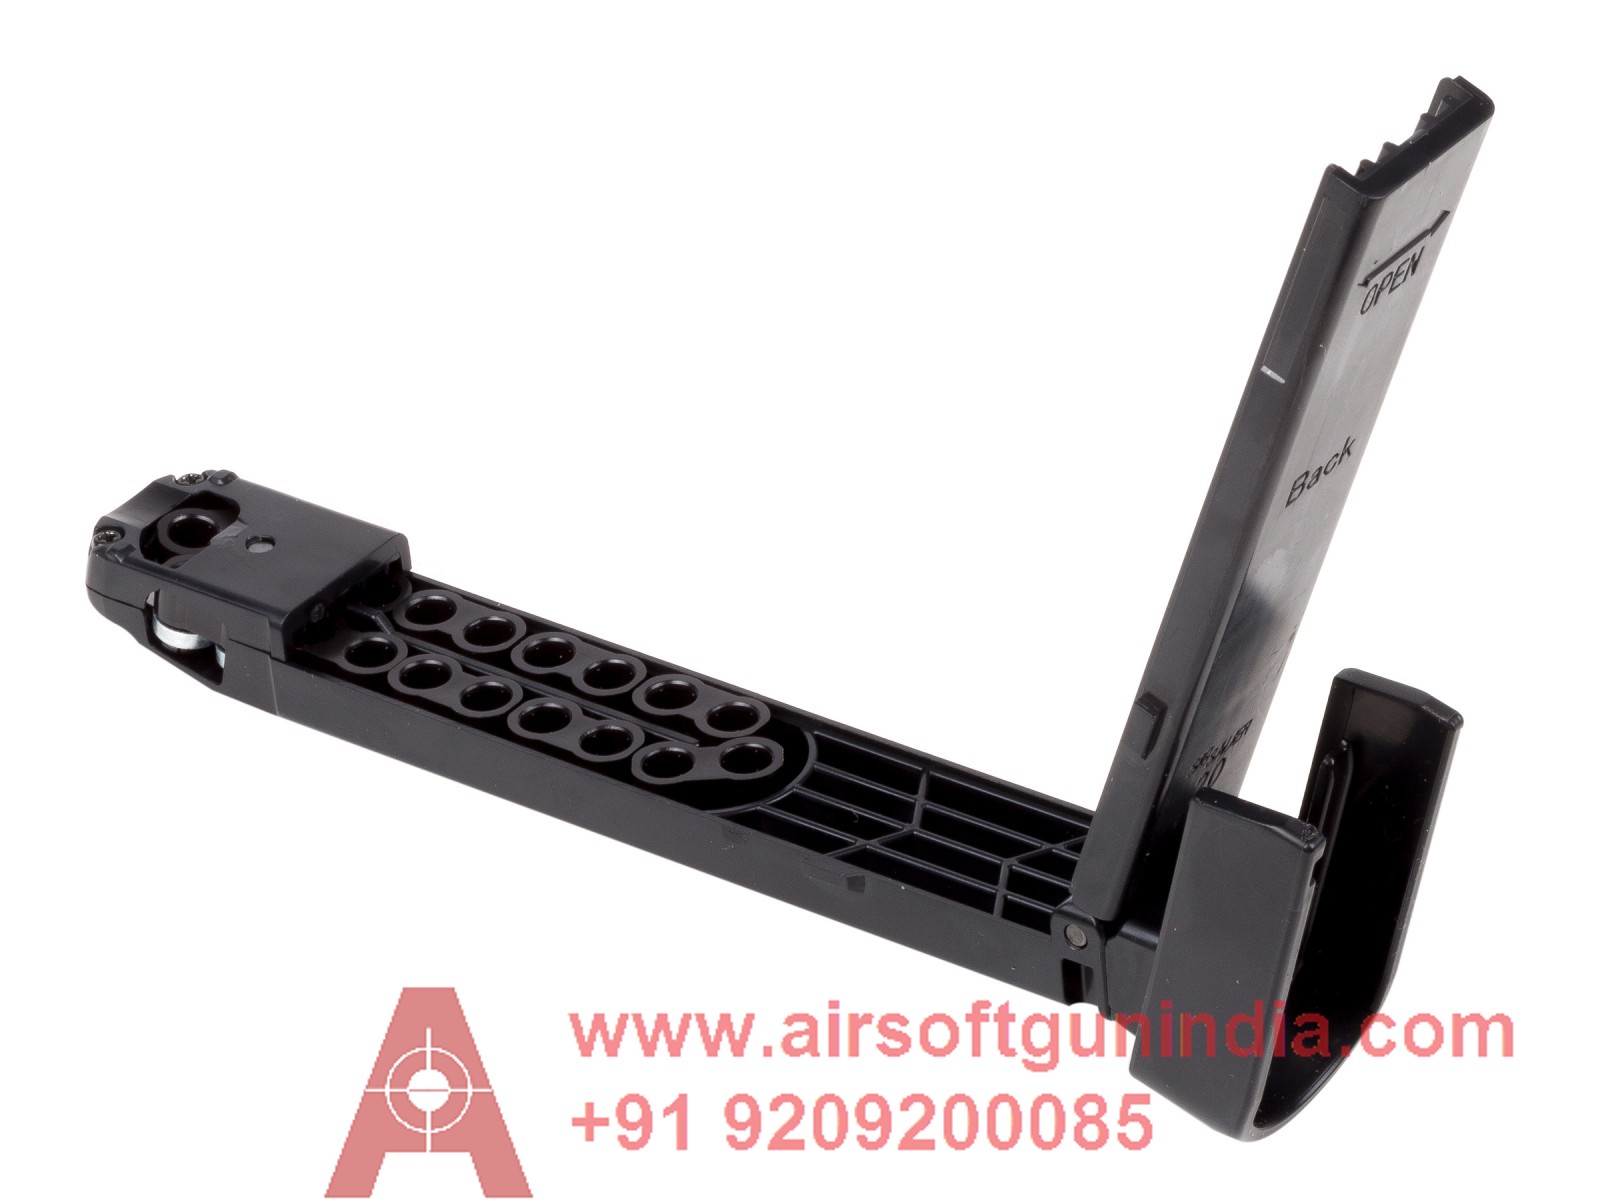 Sig Sauer X-Five ASP CO2 Pellet Pistol, Silver By Airsoft Gun India